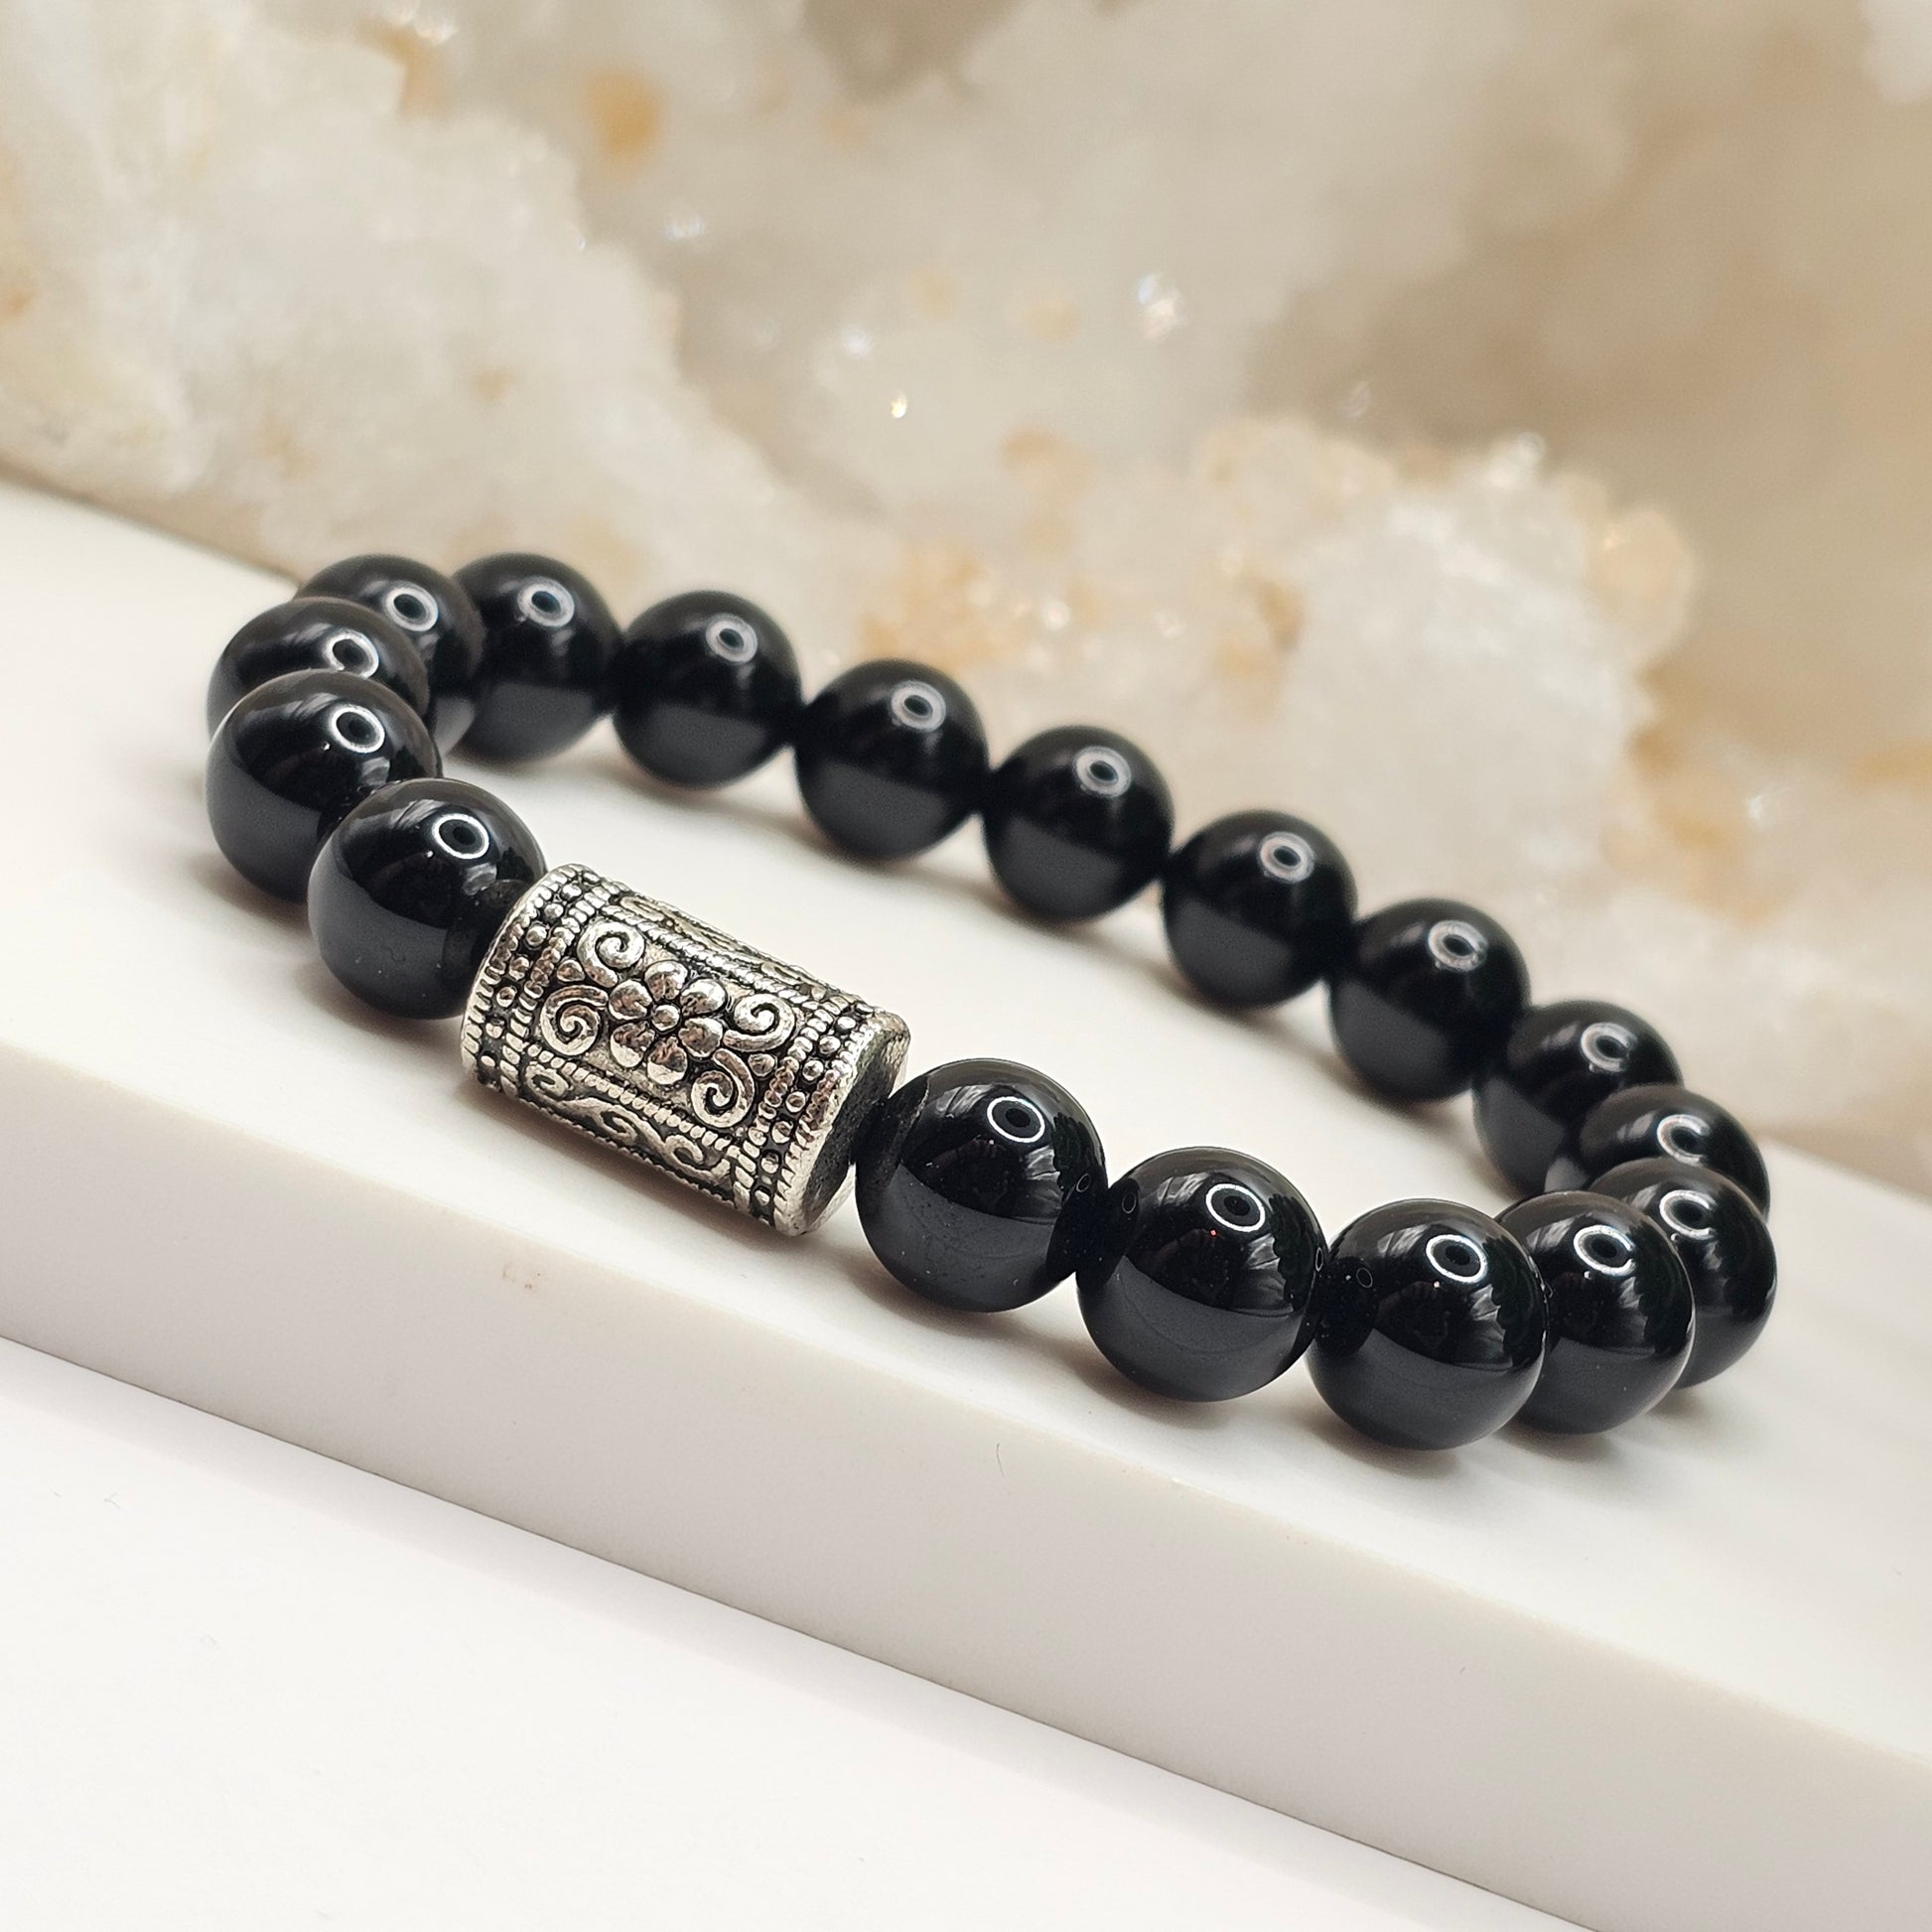 10mm Onyx and large focal bead gemstone stretch bracelet